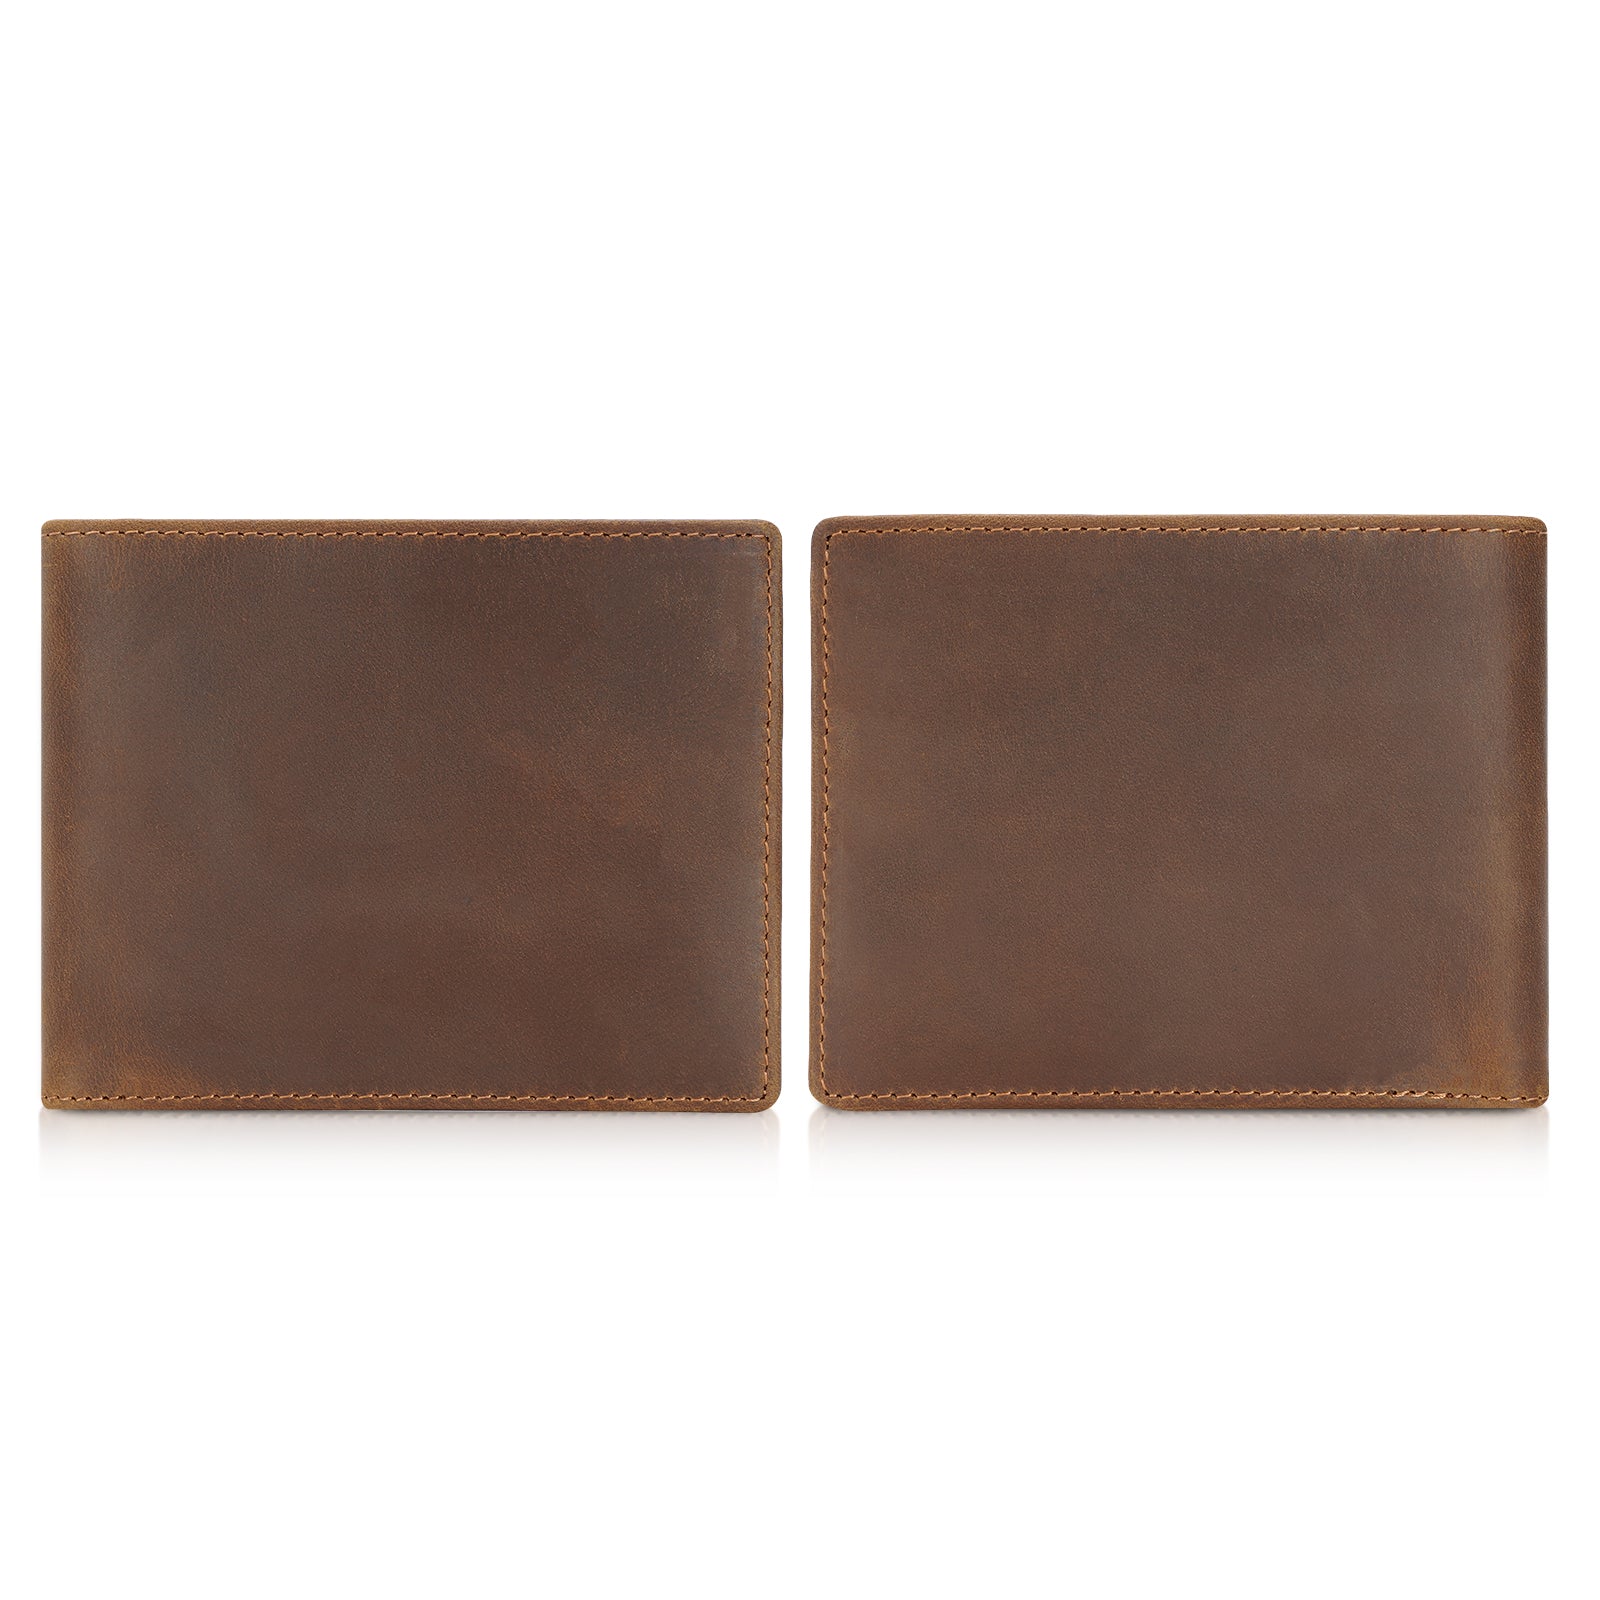 Polare Full Grain Leather Wallet For Men RFID Blocking Slim Billfold (Brown,Front/Back)